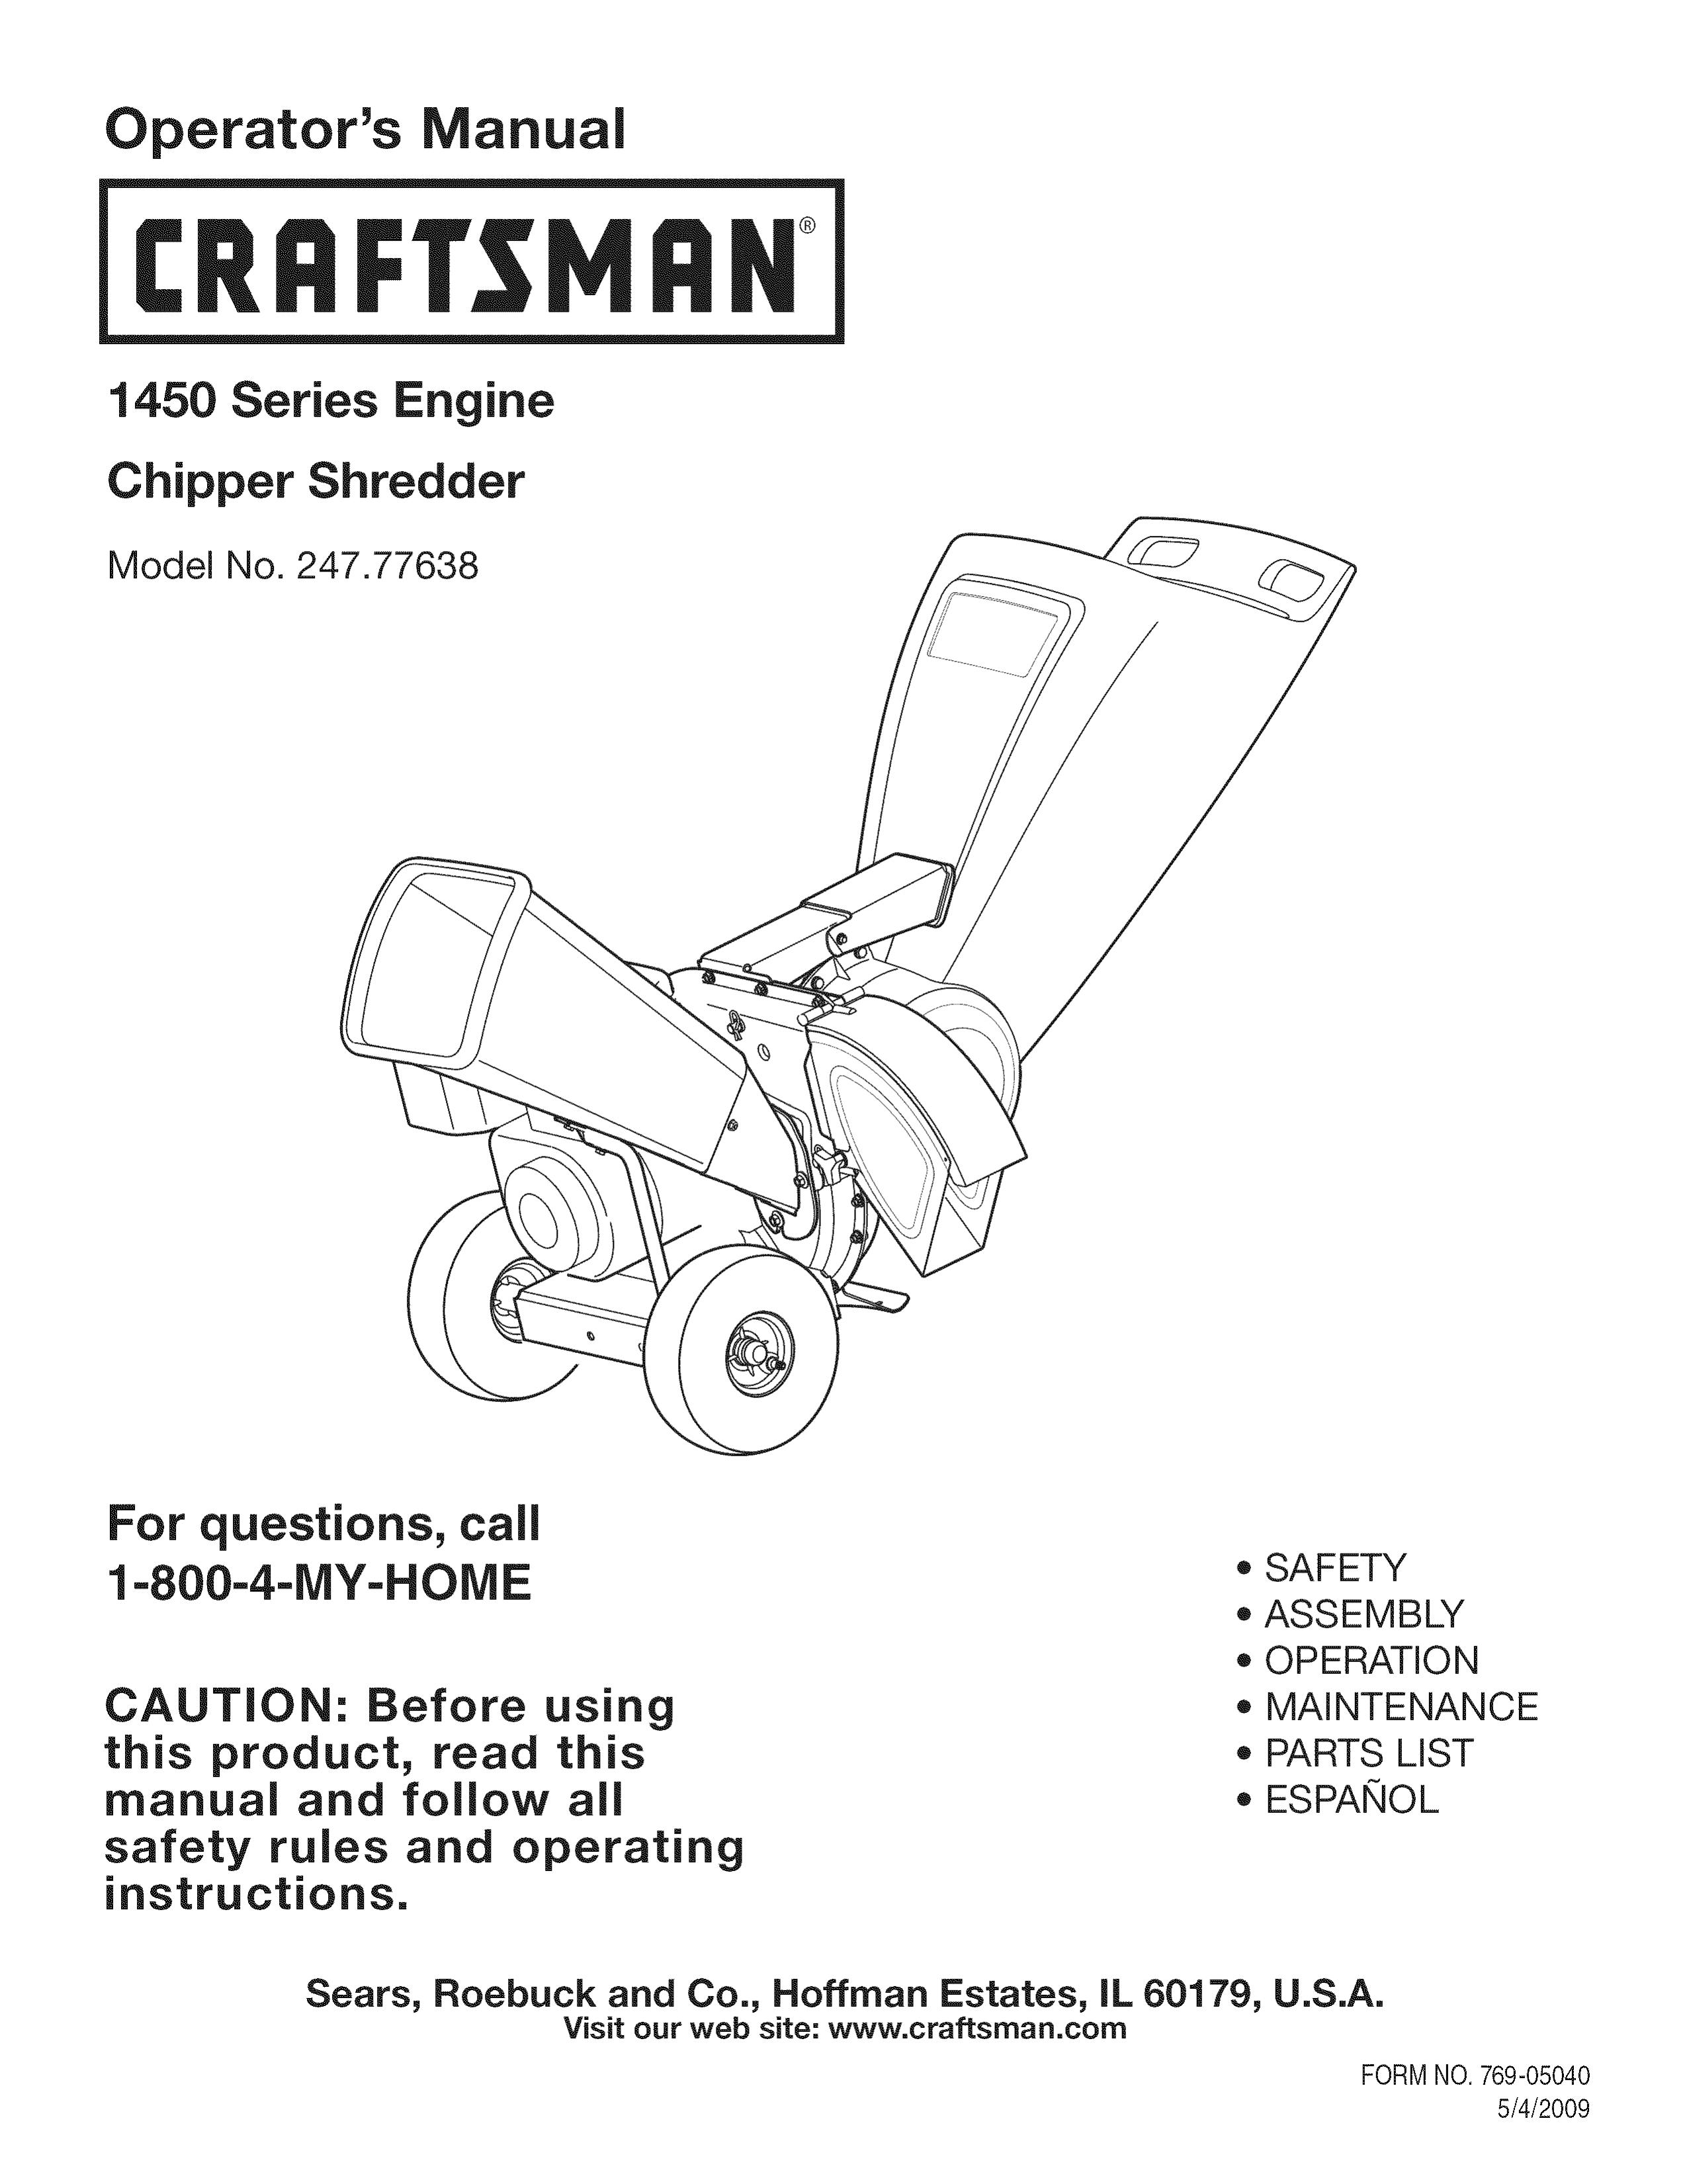 Craftsman 247.77638 Chipper User Manual